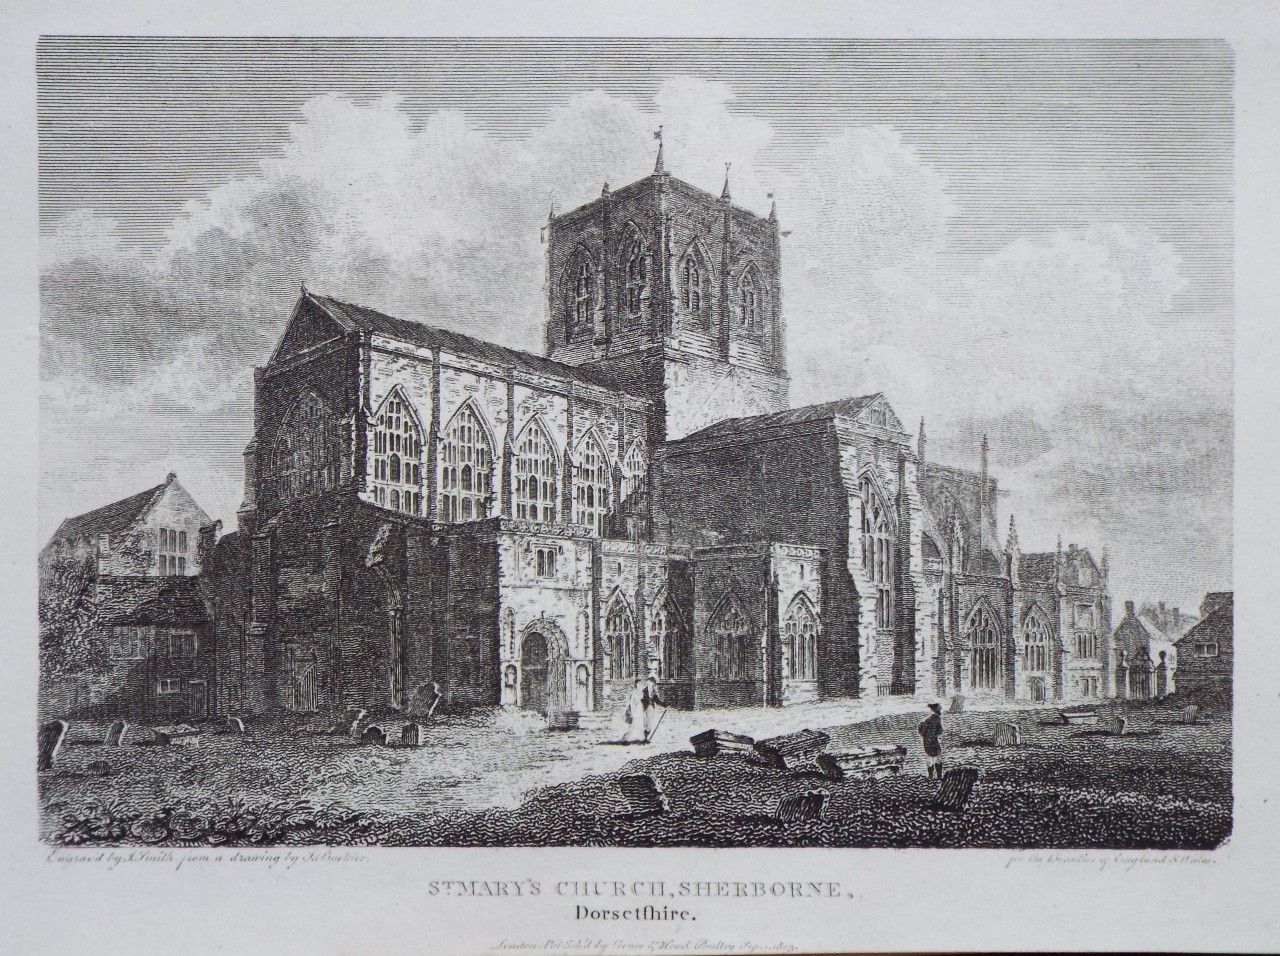 Print - St. Mary's Church, Sherborn, Dorsetshire. - Smith